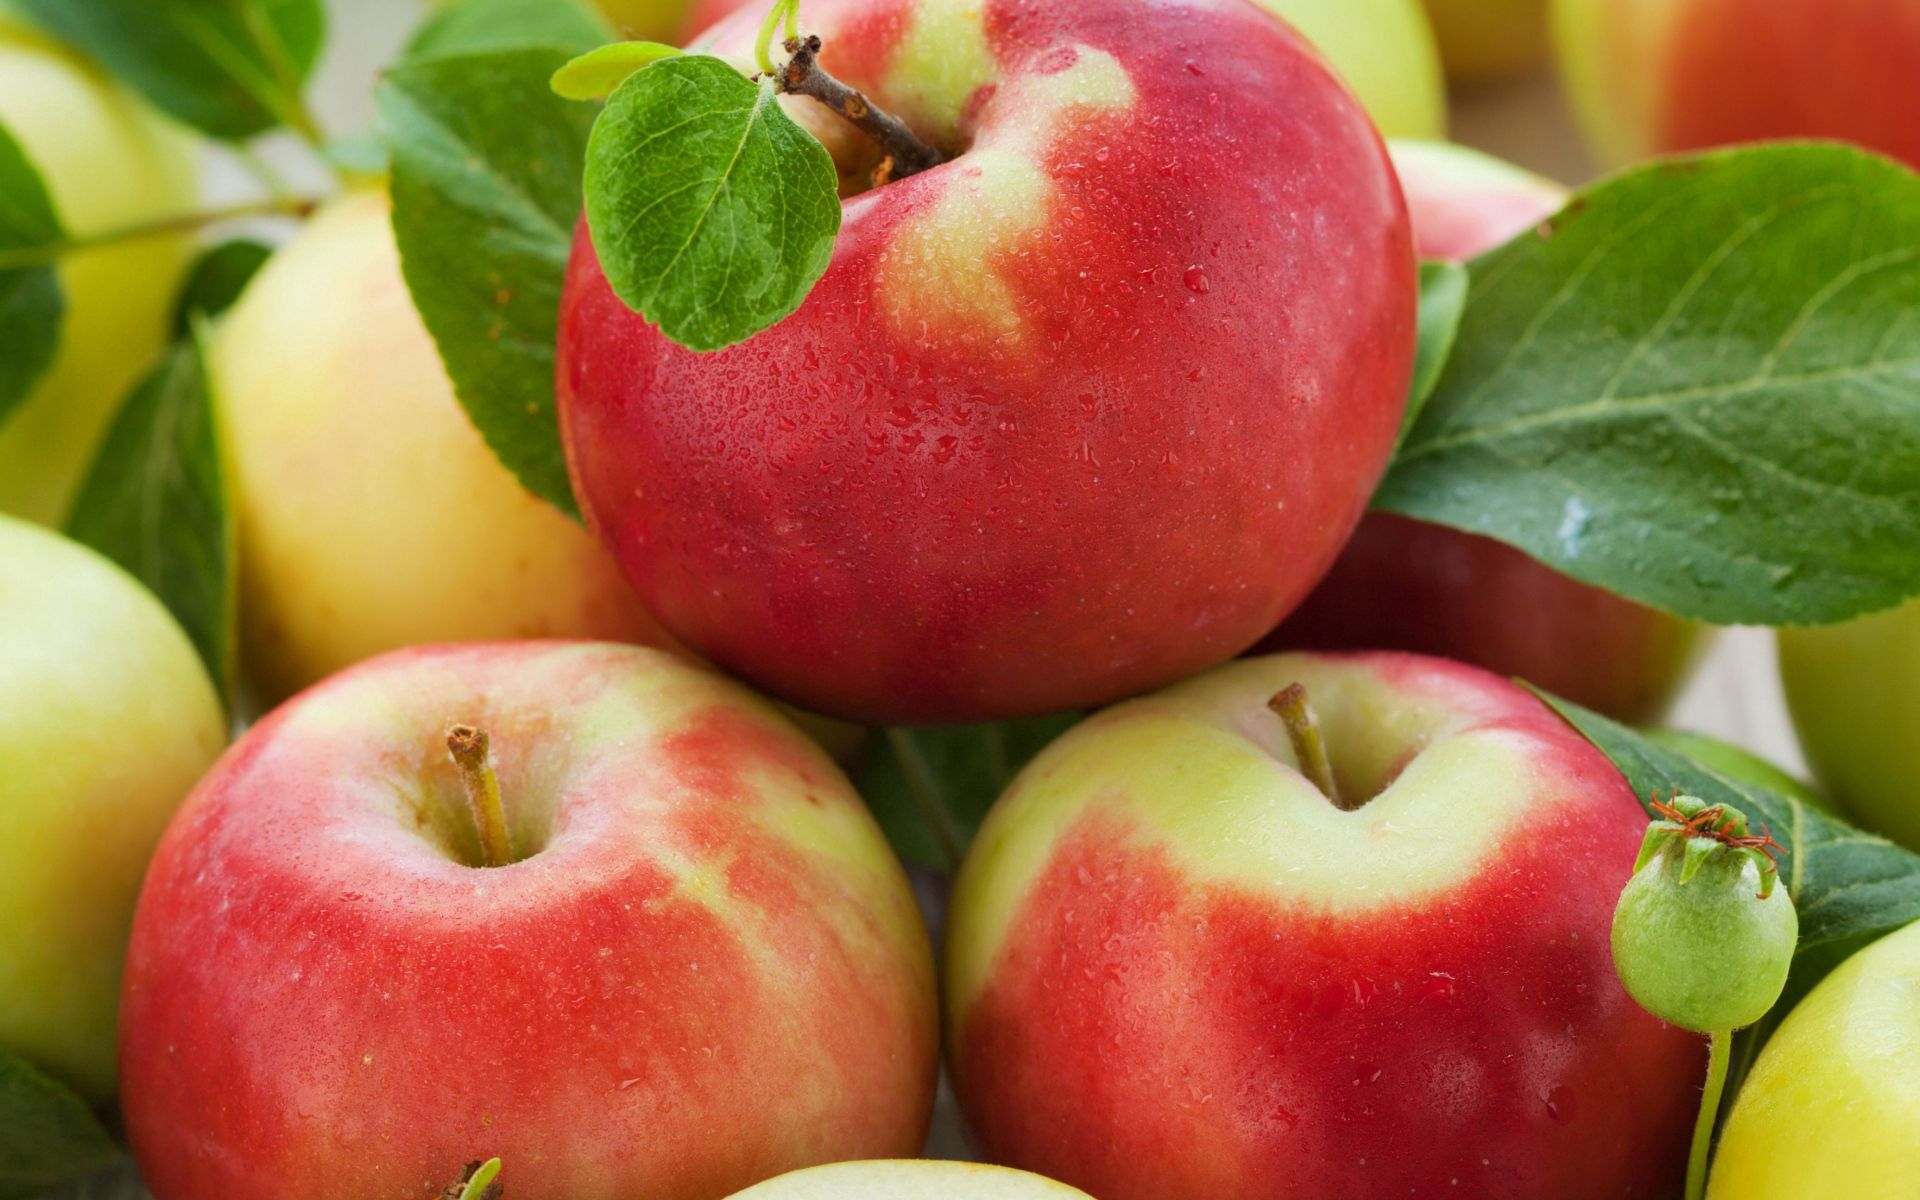 fruits, apples, food, ripe